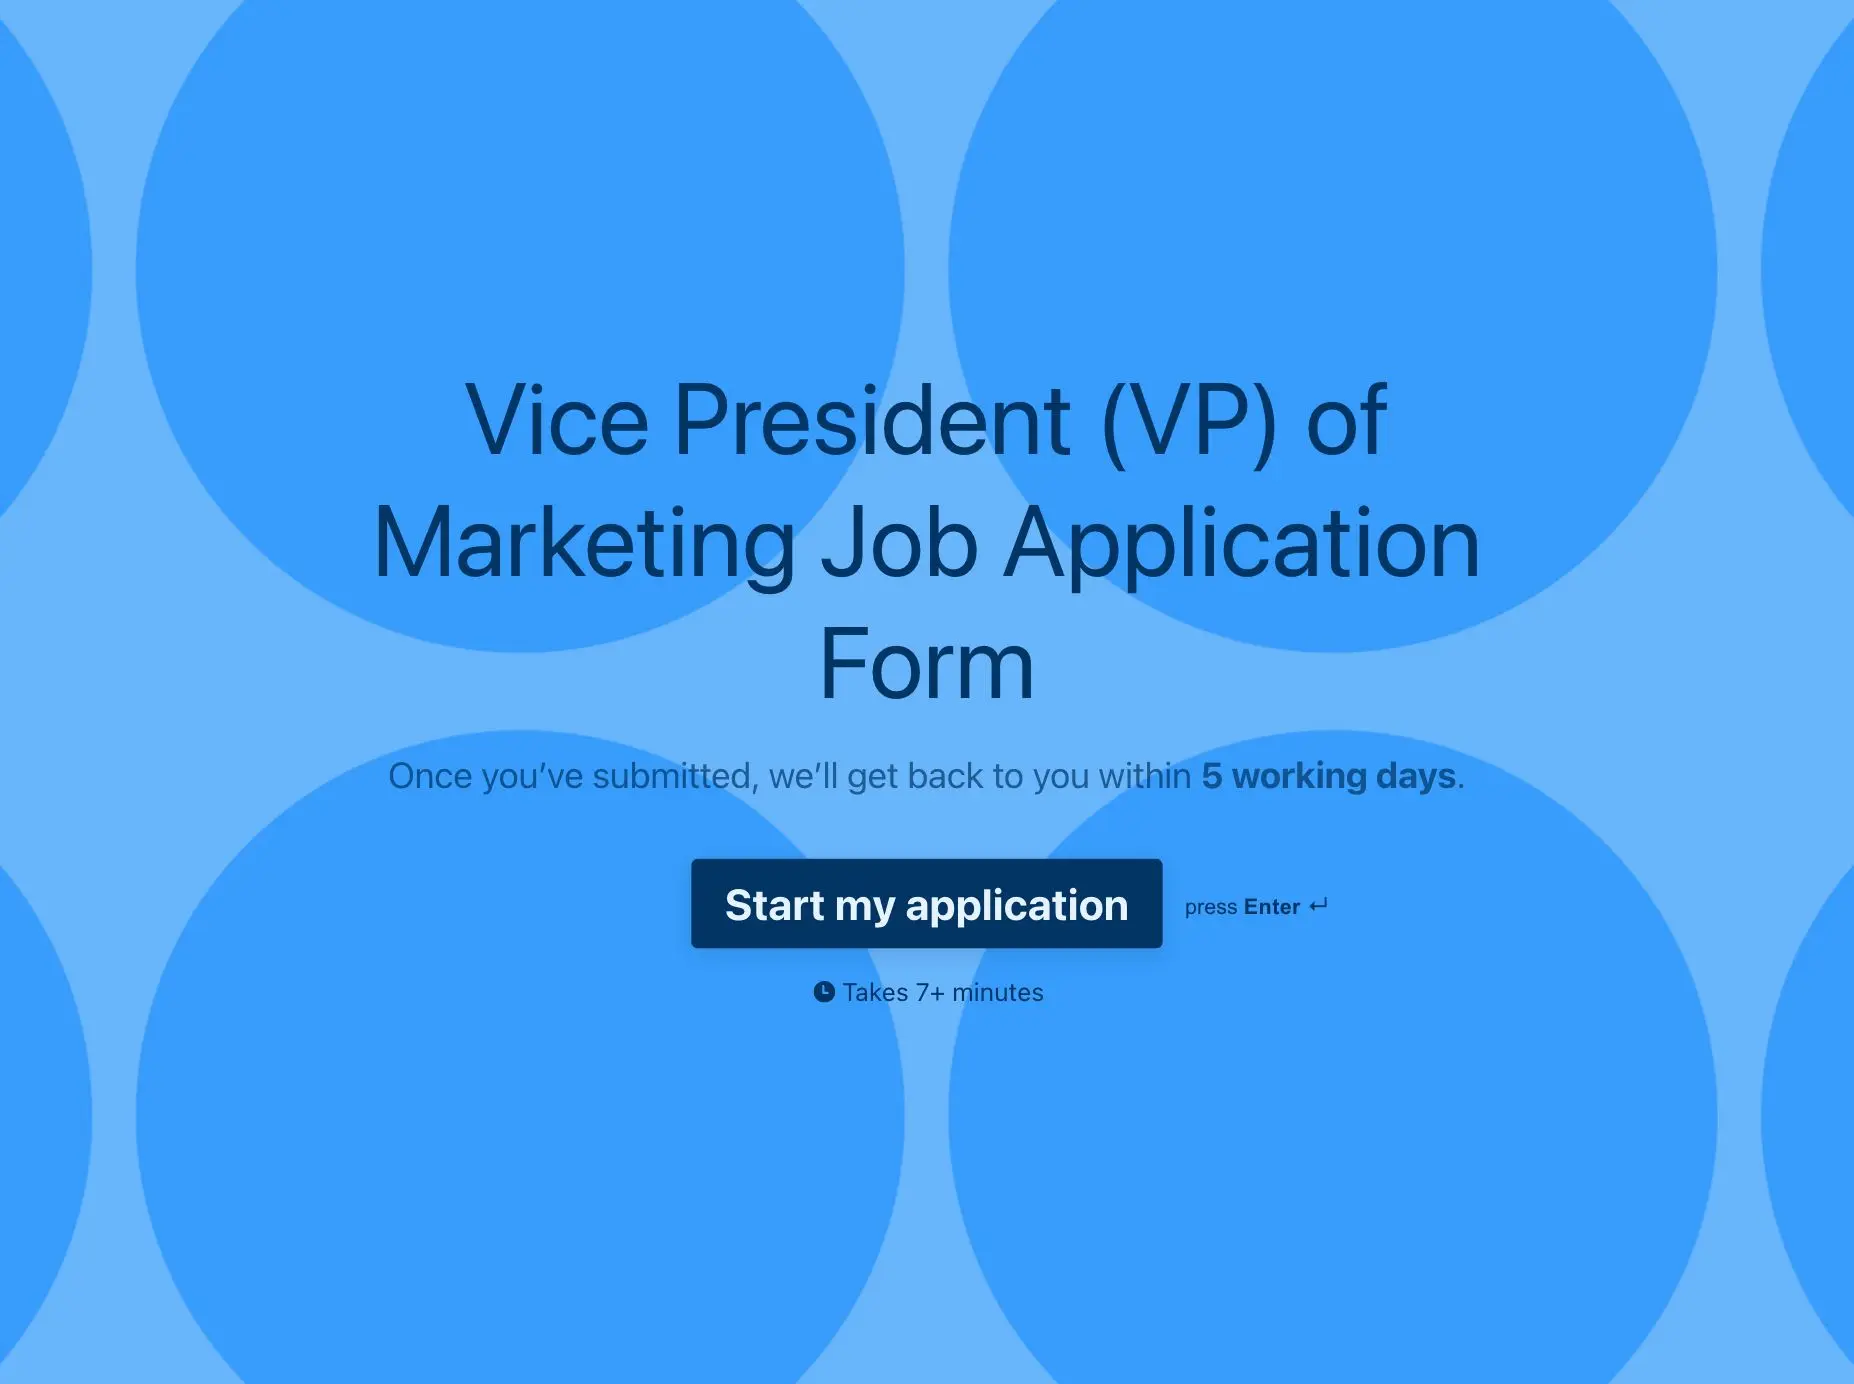 Vice President (VP) of Marketing Job Application Form Template Hero